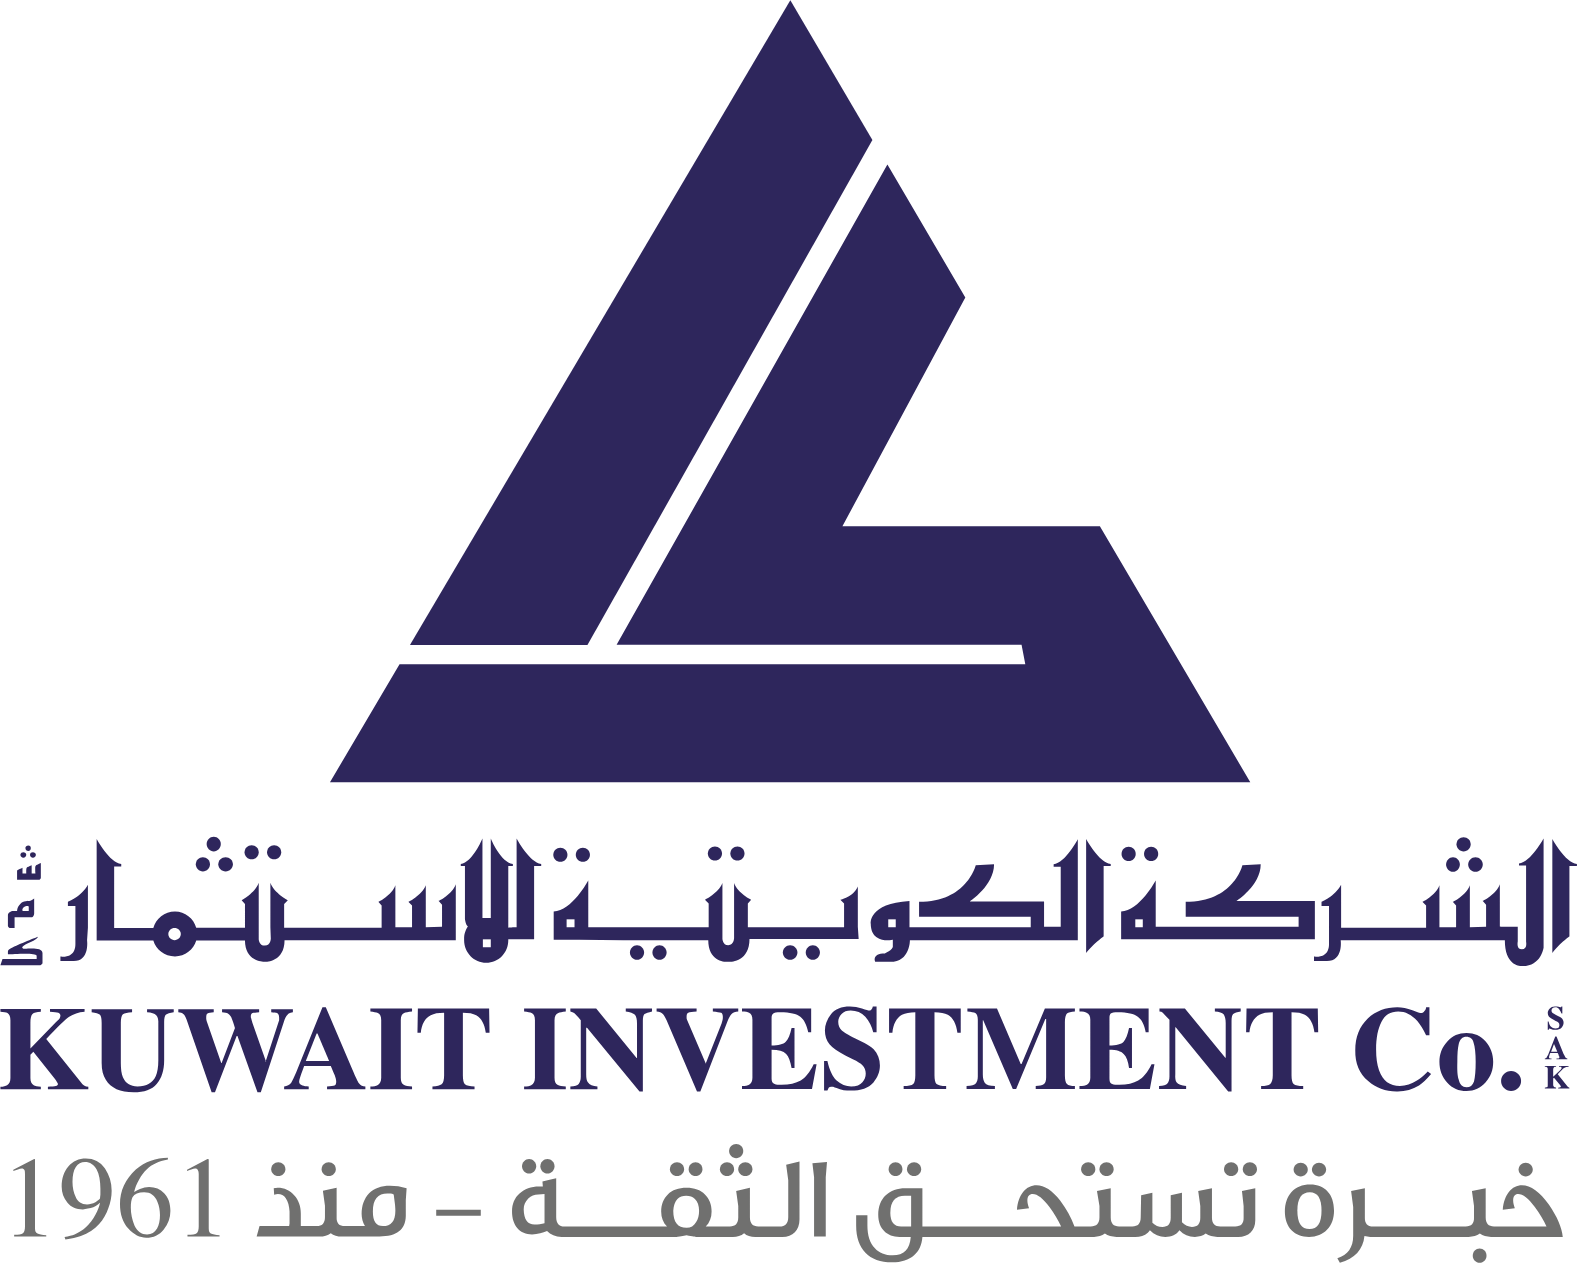 Kuwait Investment Company logo large (transparent PNG)